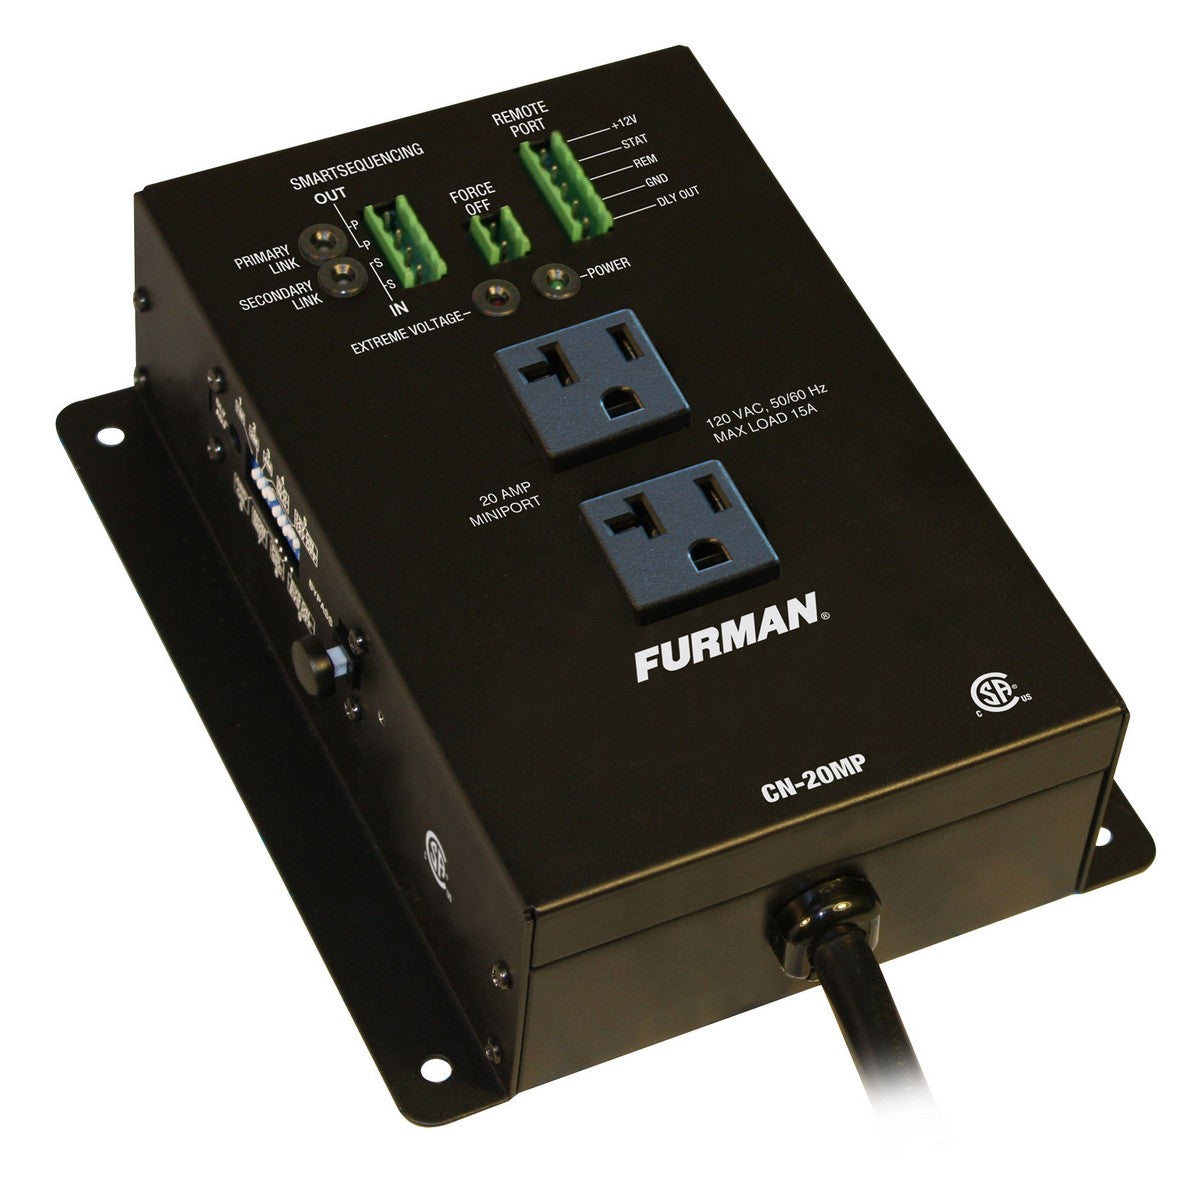 Furman CN-20MP | 20A Remote Duplex EVS Smart Sequencing 10 Feet Cord